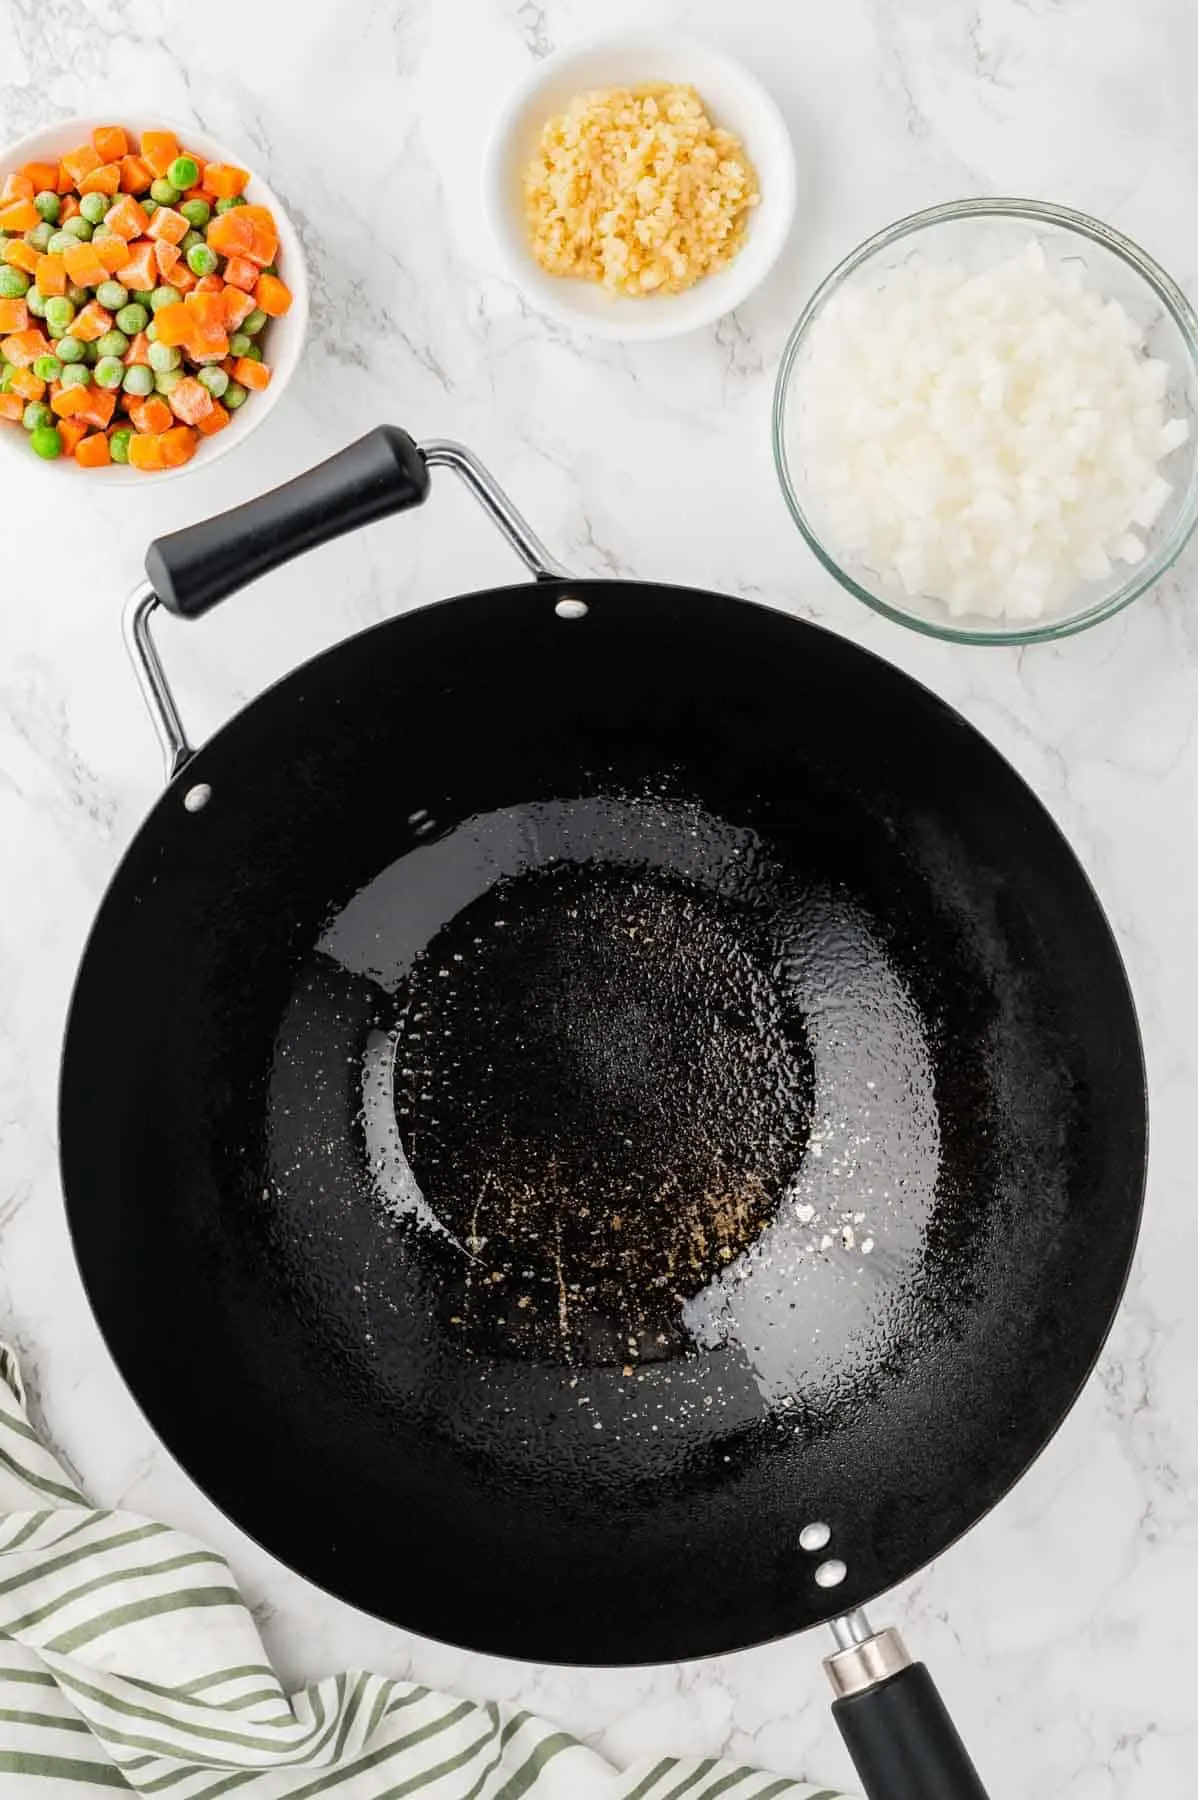 oil heating in a wok